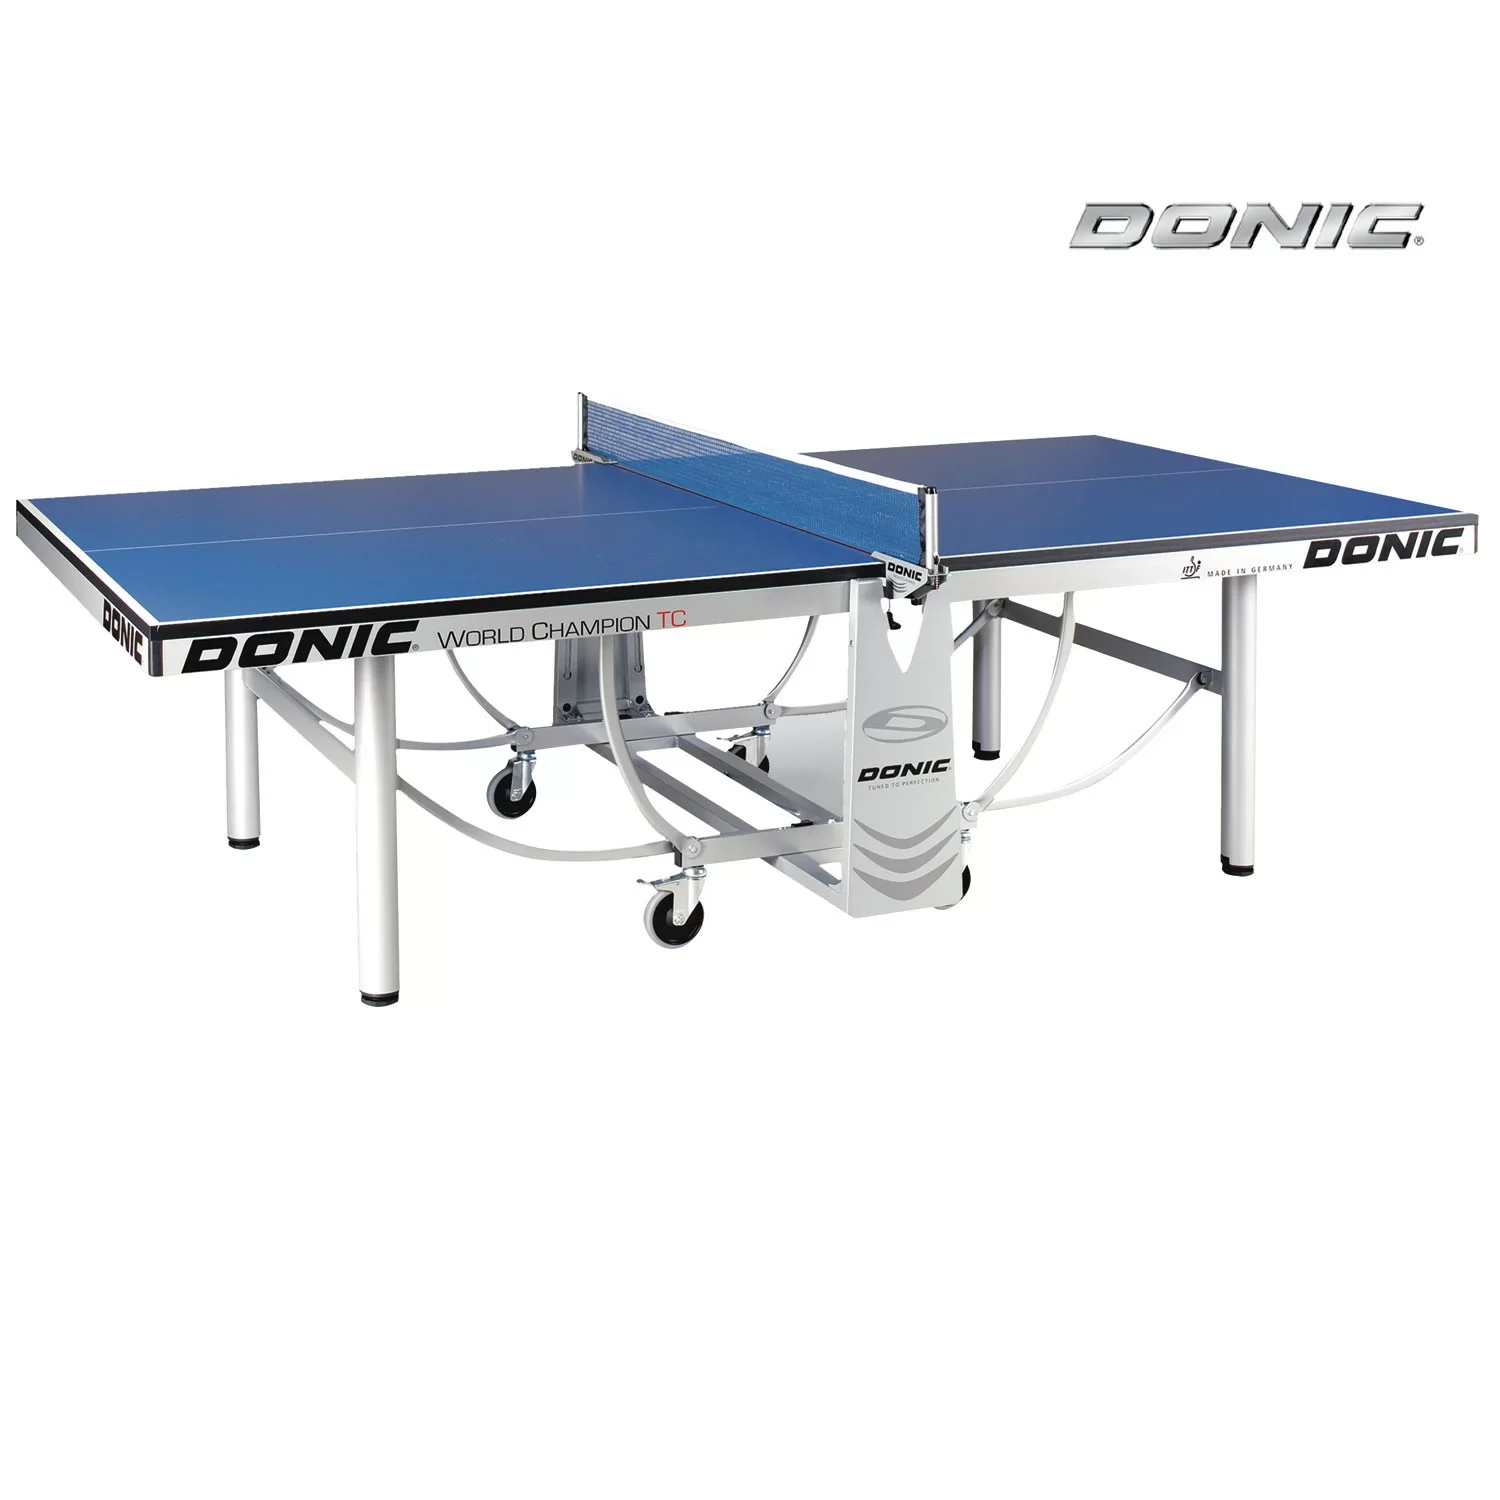 Реальное фото Теннисный стол DONIC WORLD CHAMPION TC BLUE (без сетки) 400240-B от магазина СпортЕВ